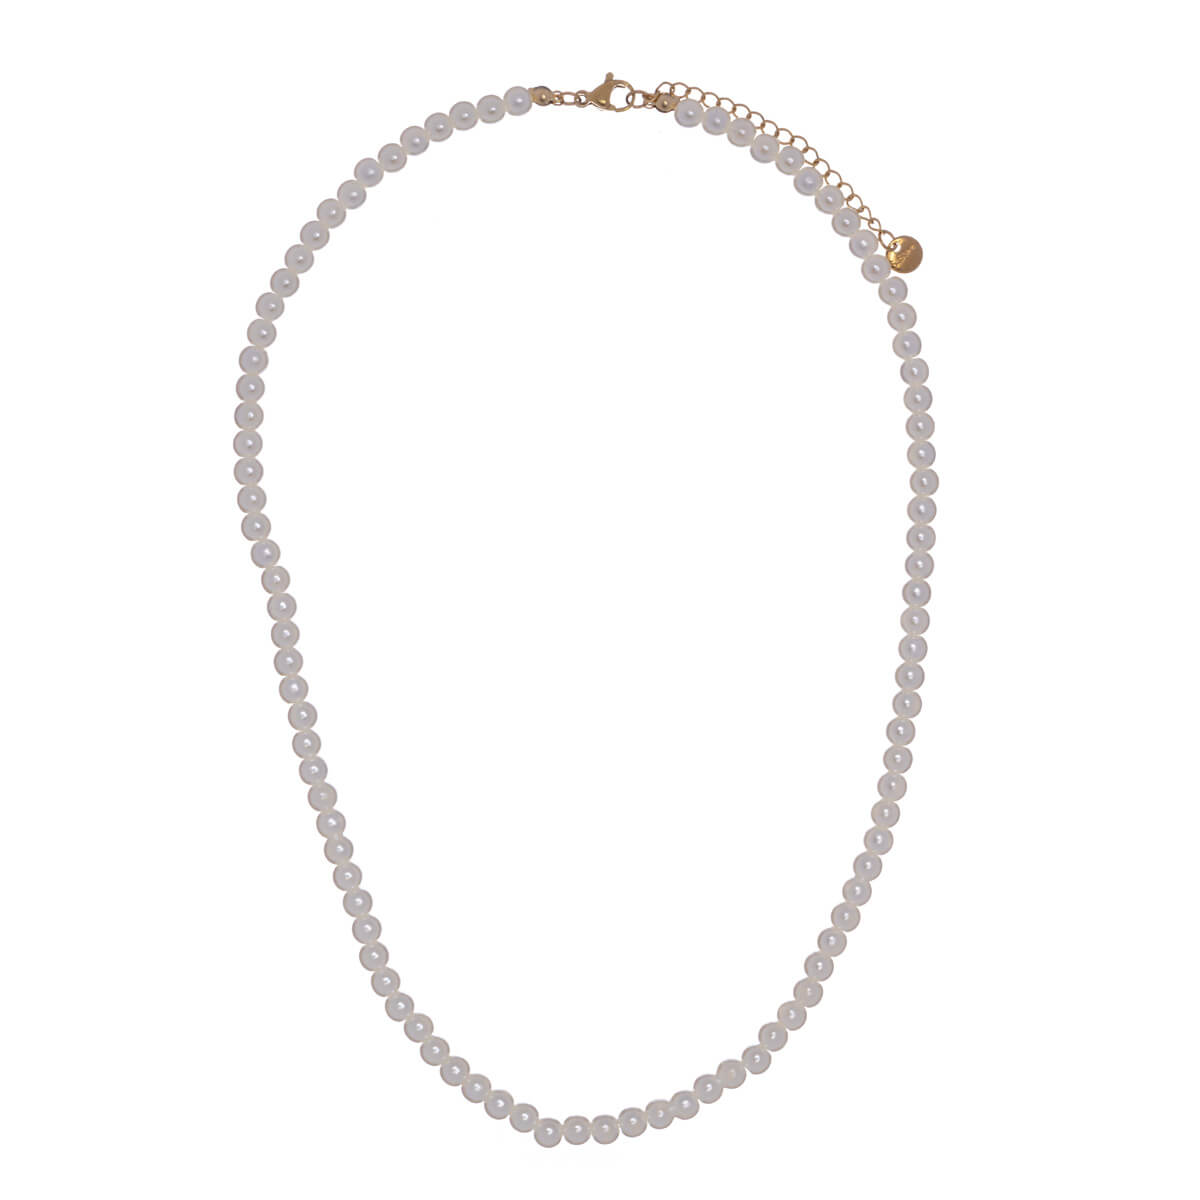 Bead necklace necklace neck beads 5mm 43cm +5cm (Steel 316L)